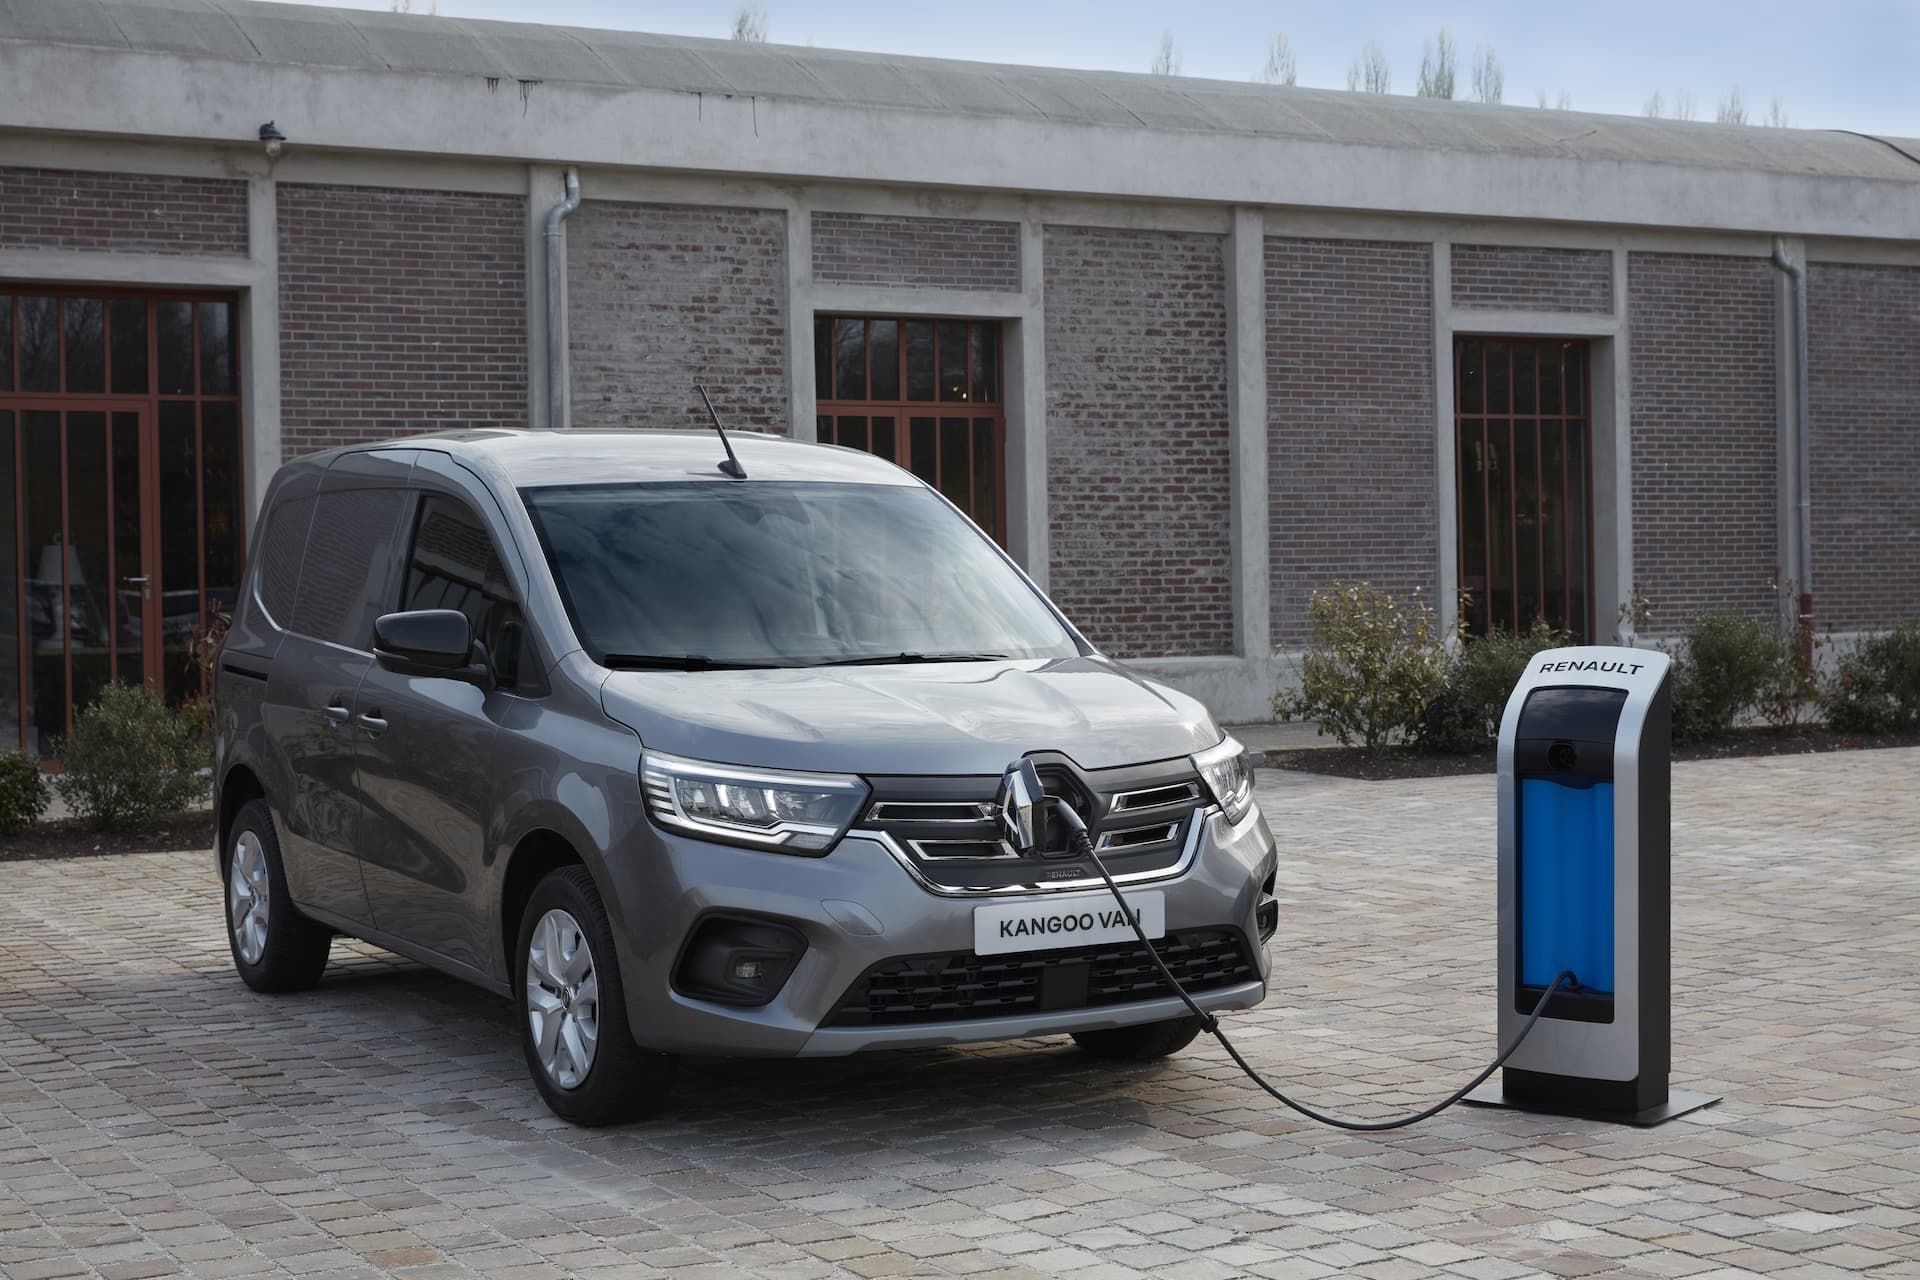 Grey Renault Kangoo E-Tech charging